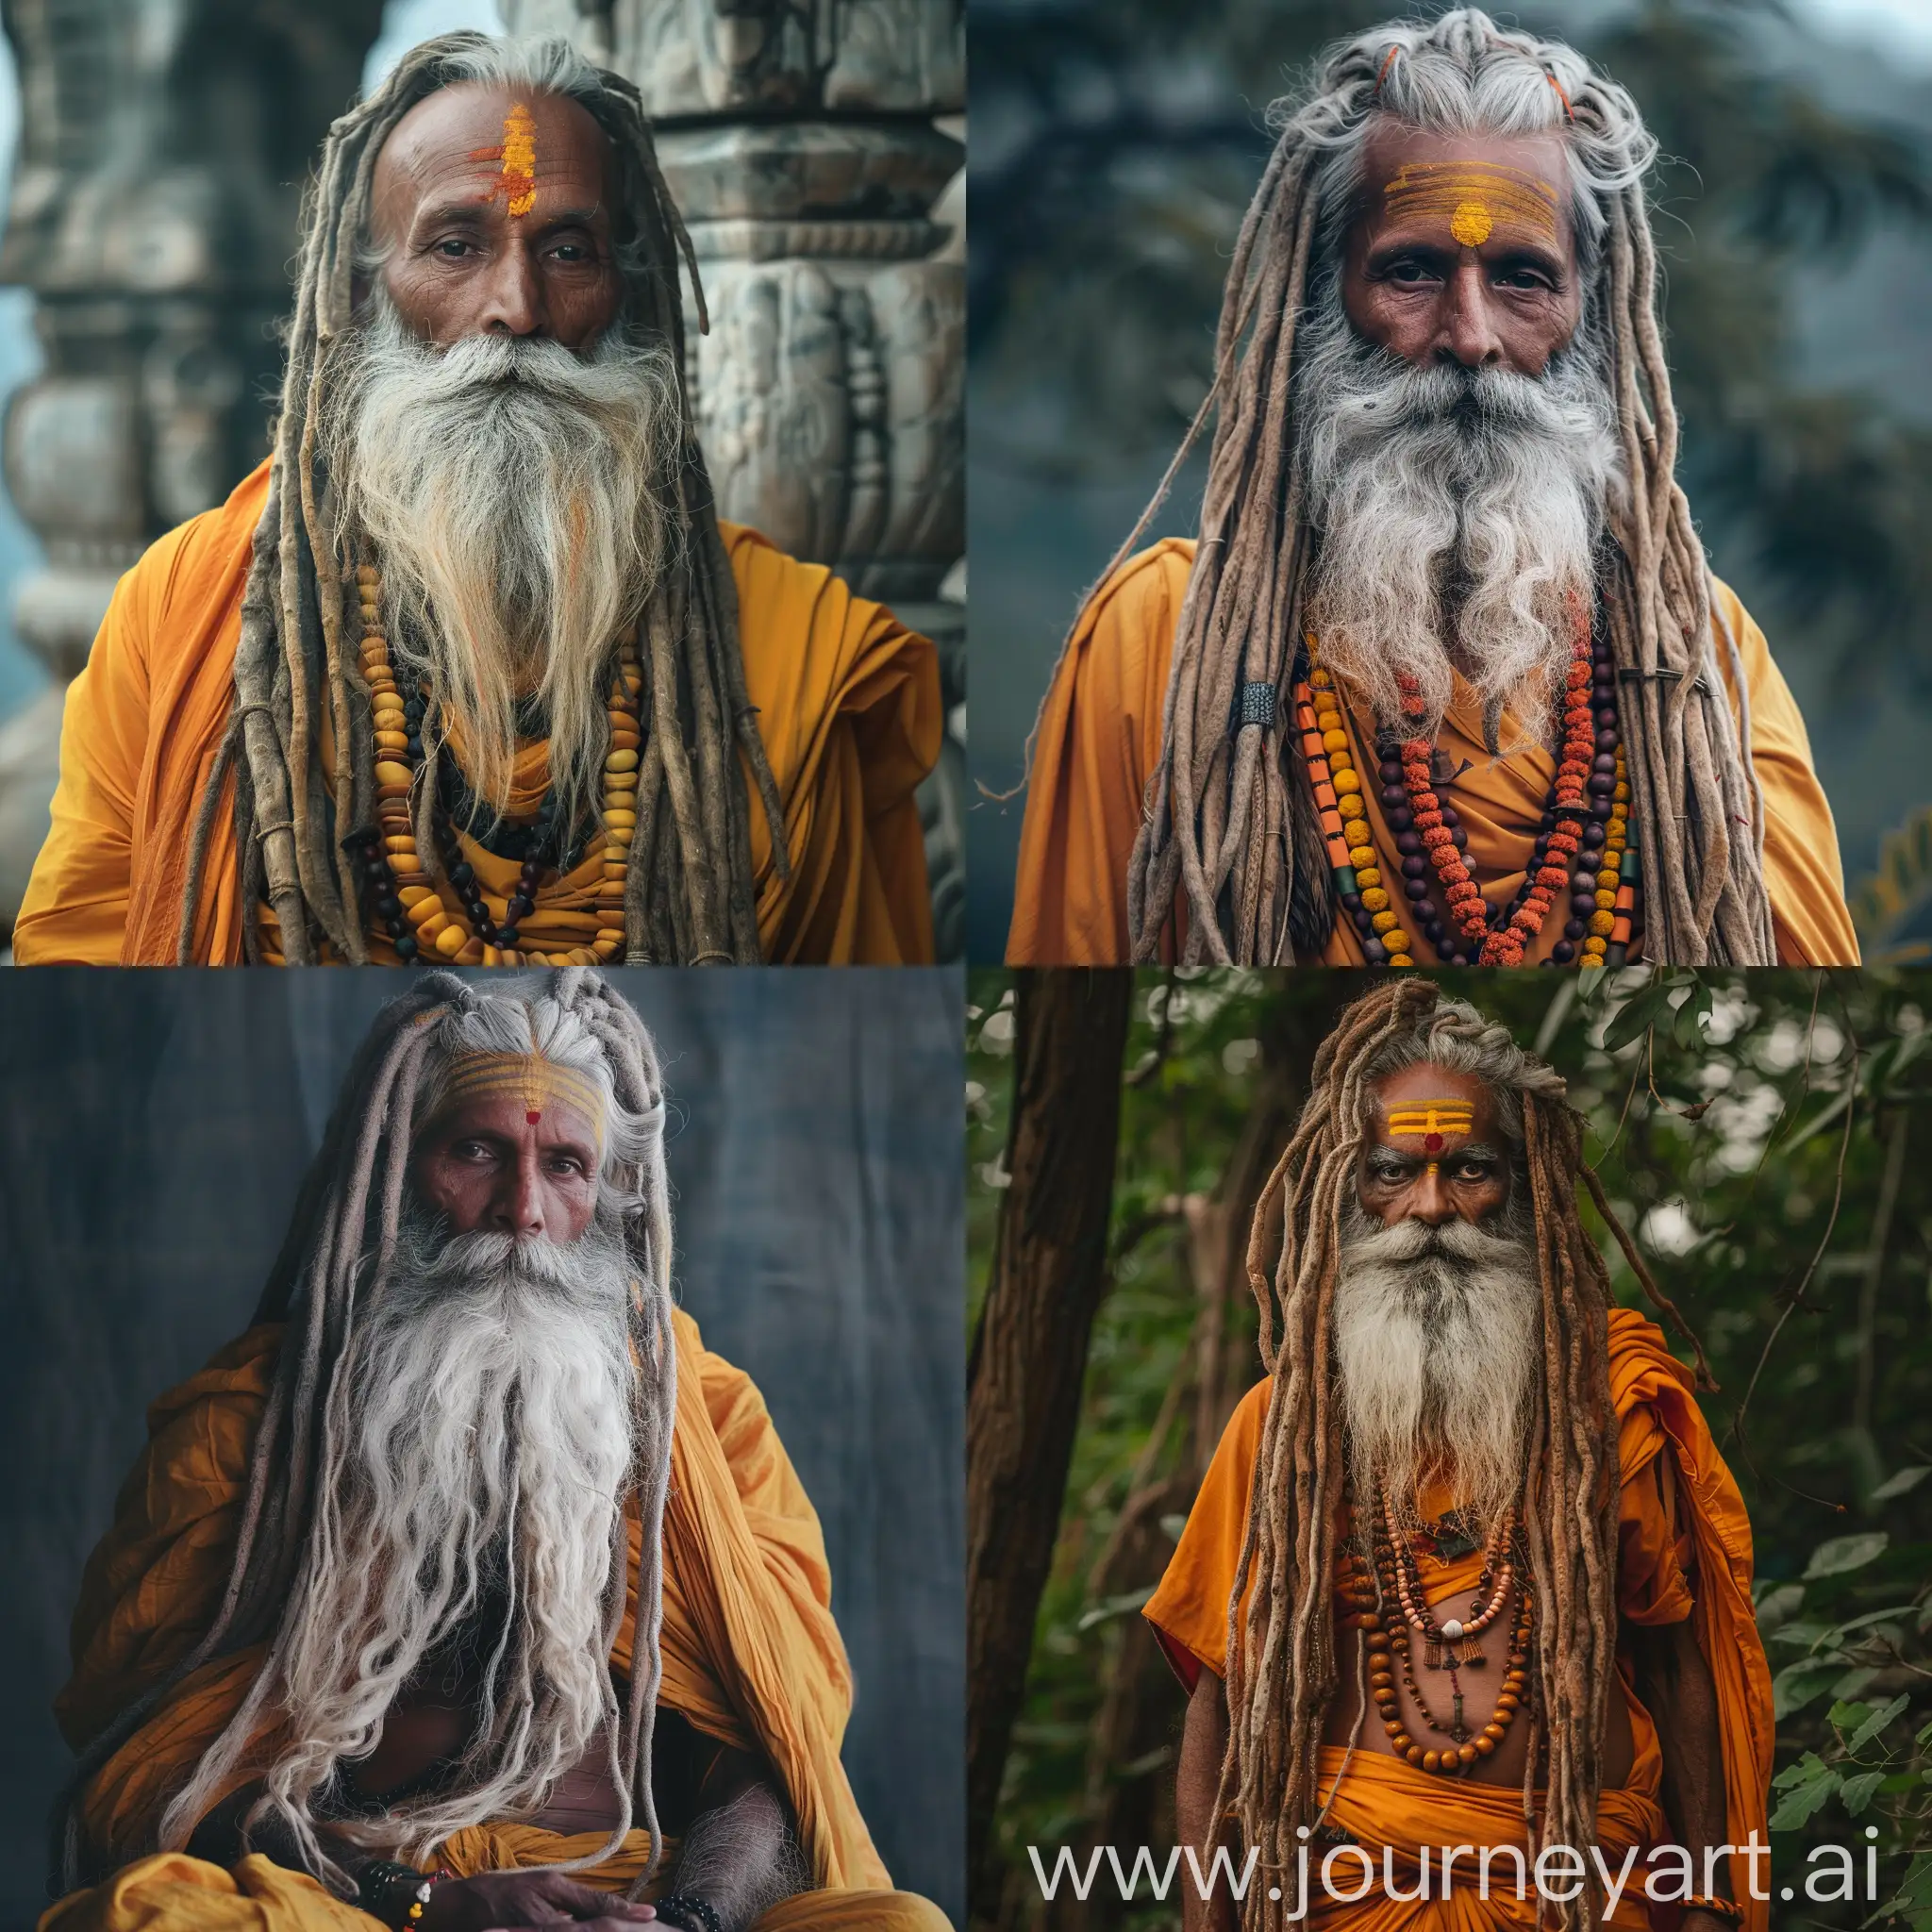 Totakacharya shaiva monk with long dreadlocks and long white beard dressed in saffrom